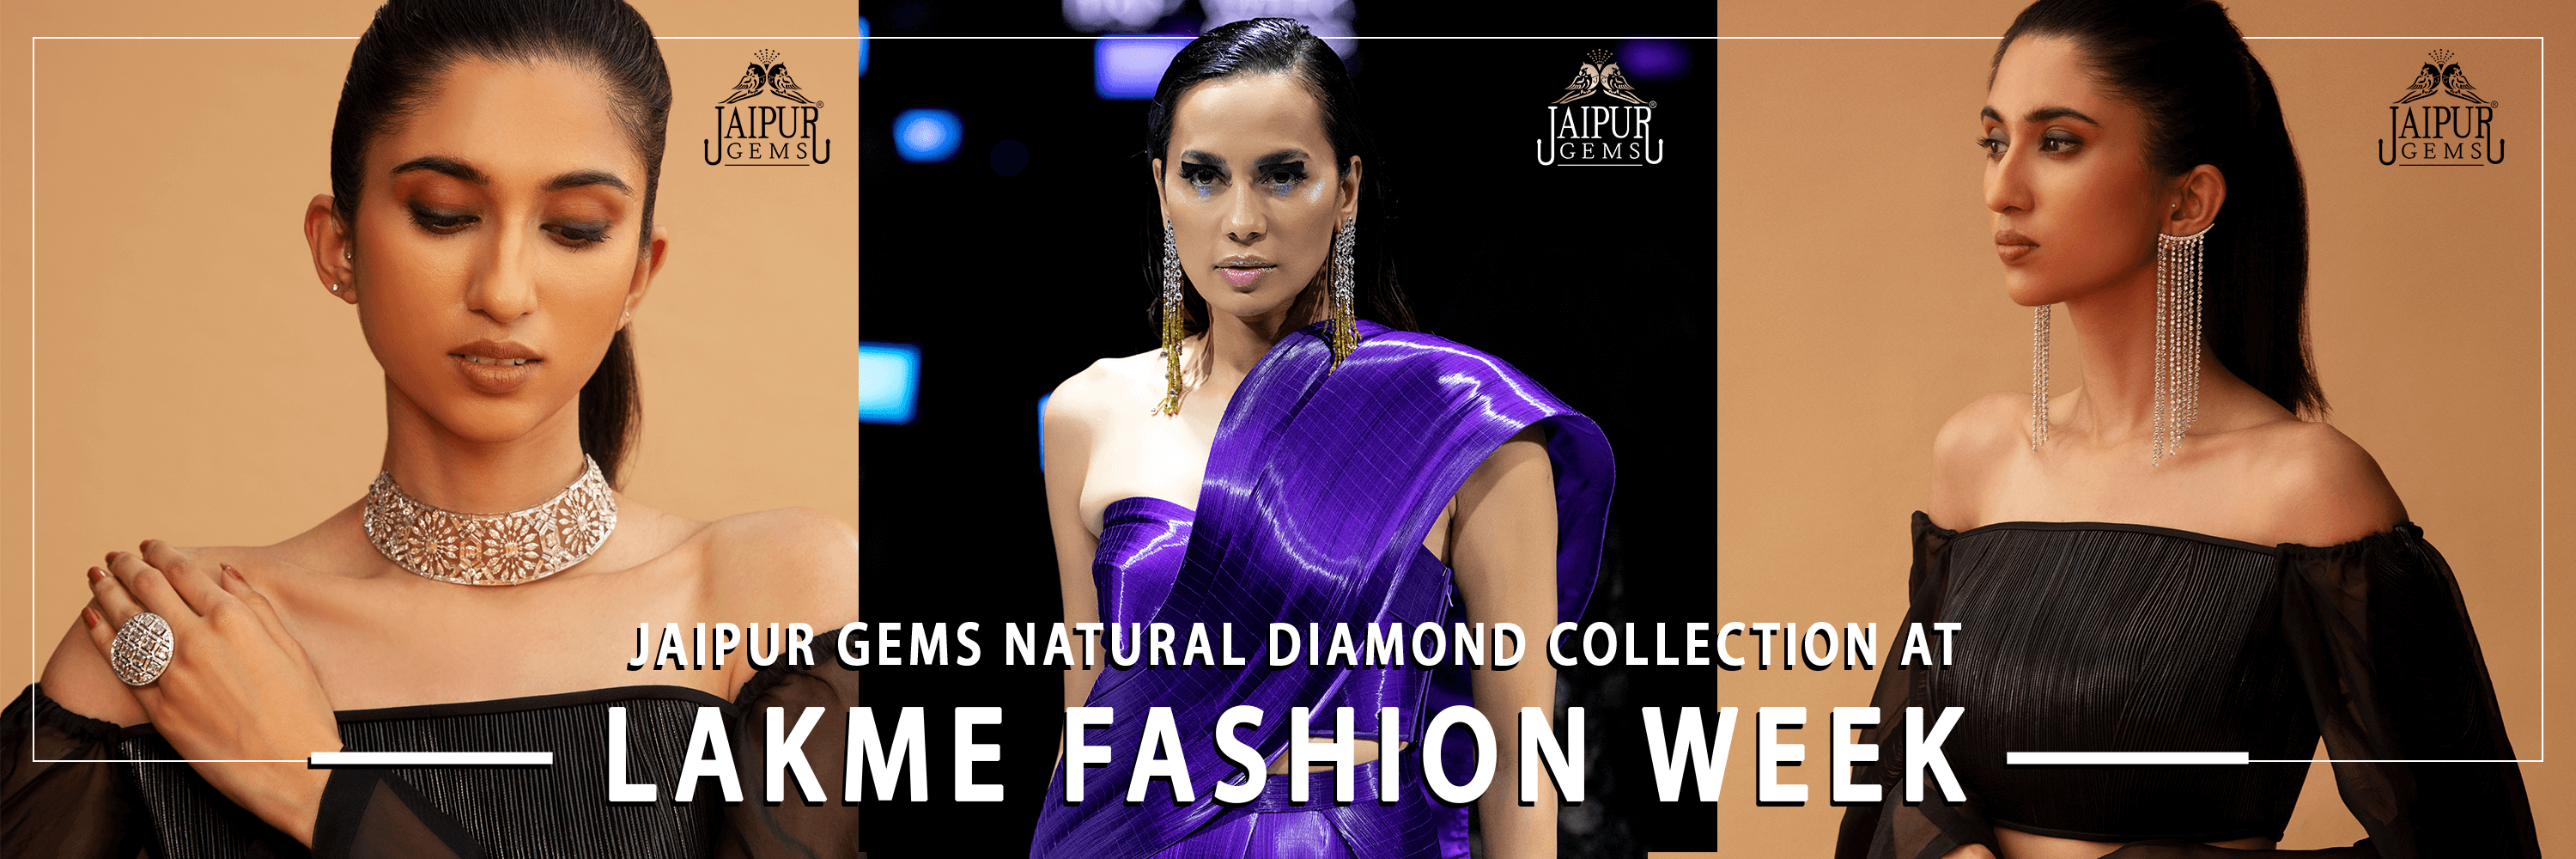 Jaipur Gems Natural Diamond Collection at Lakme Fashion Week!